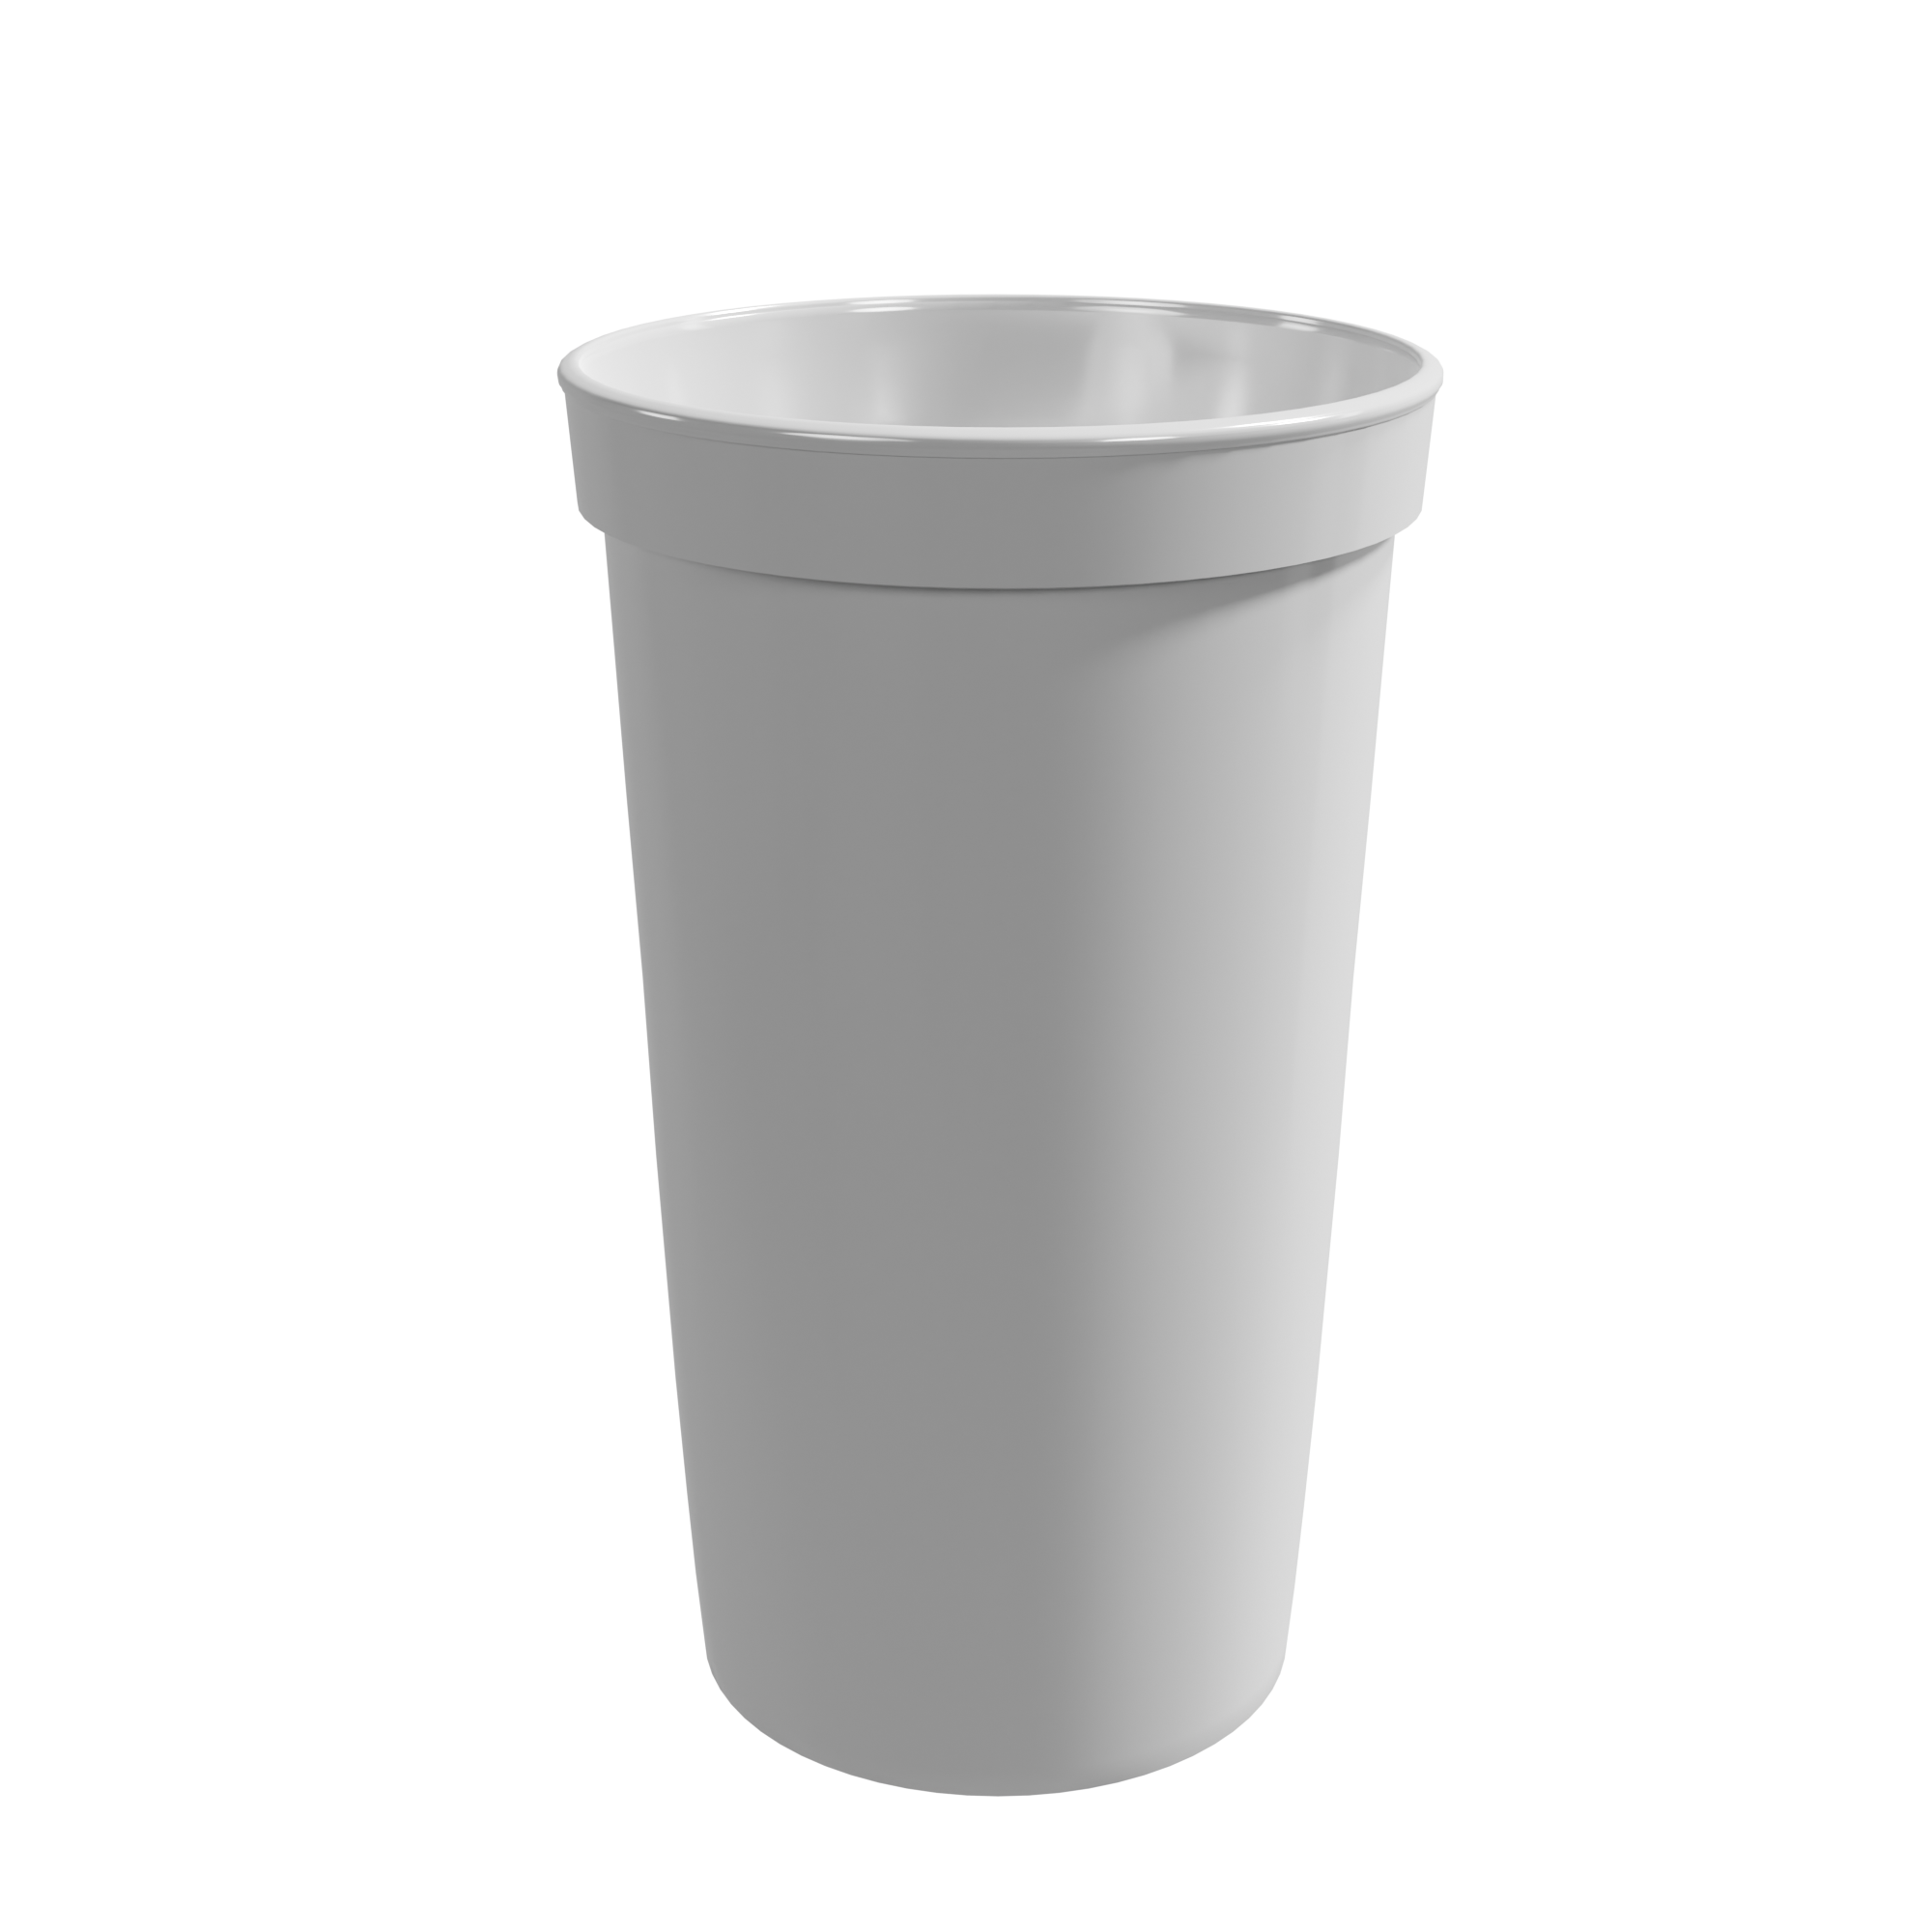 Imprinted Reusable Plastic Party Cups (22 Oz.)